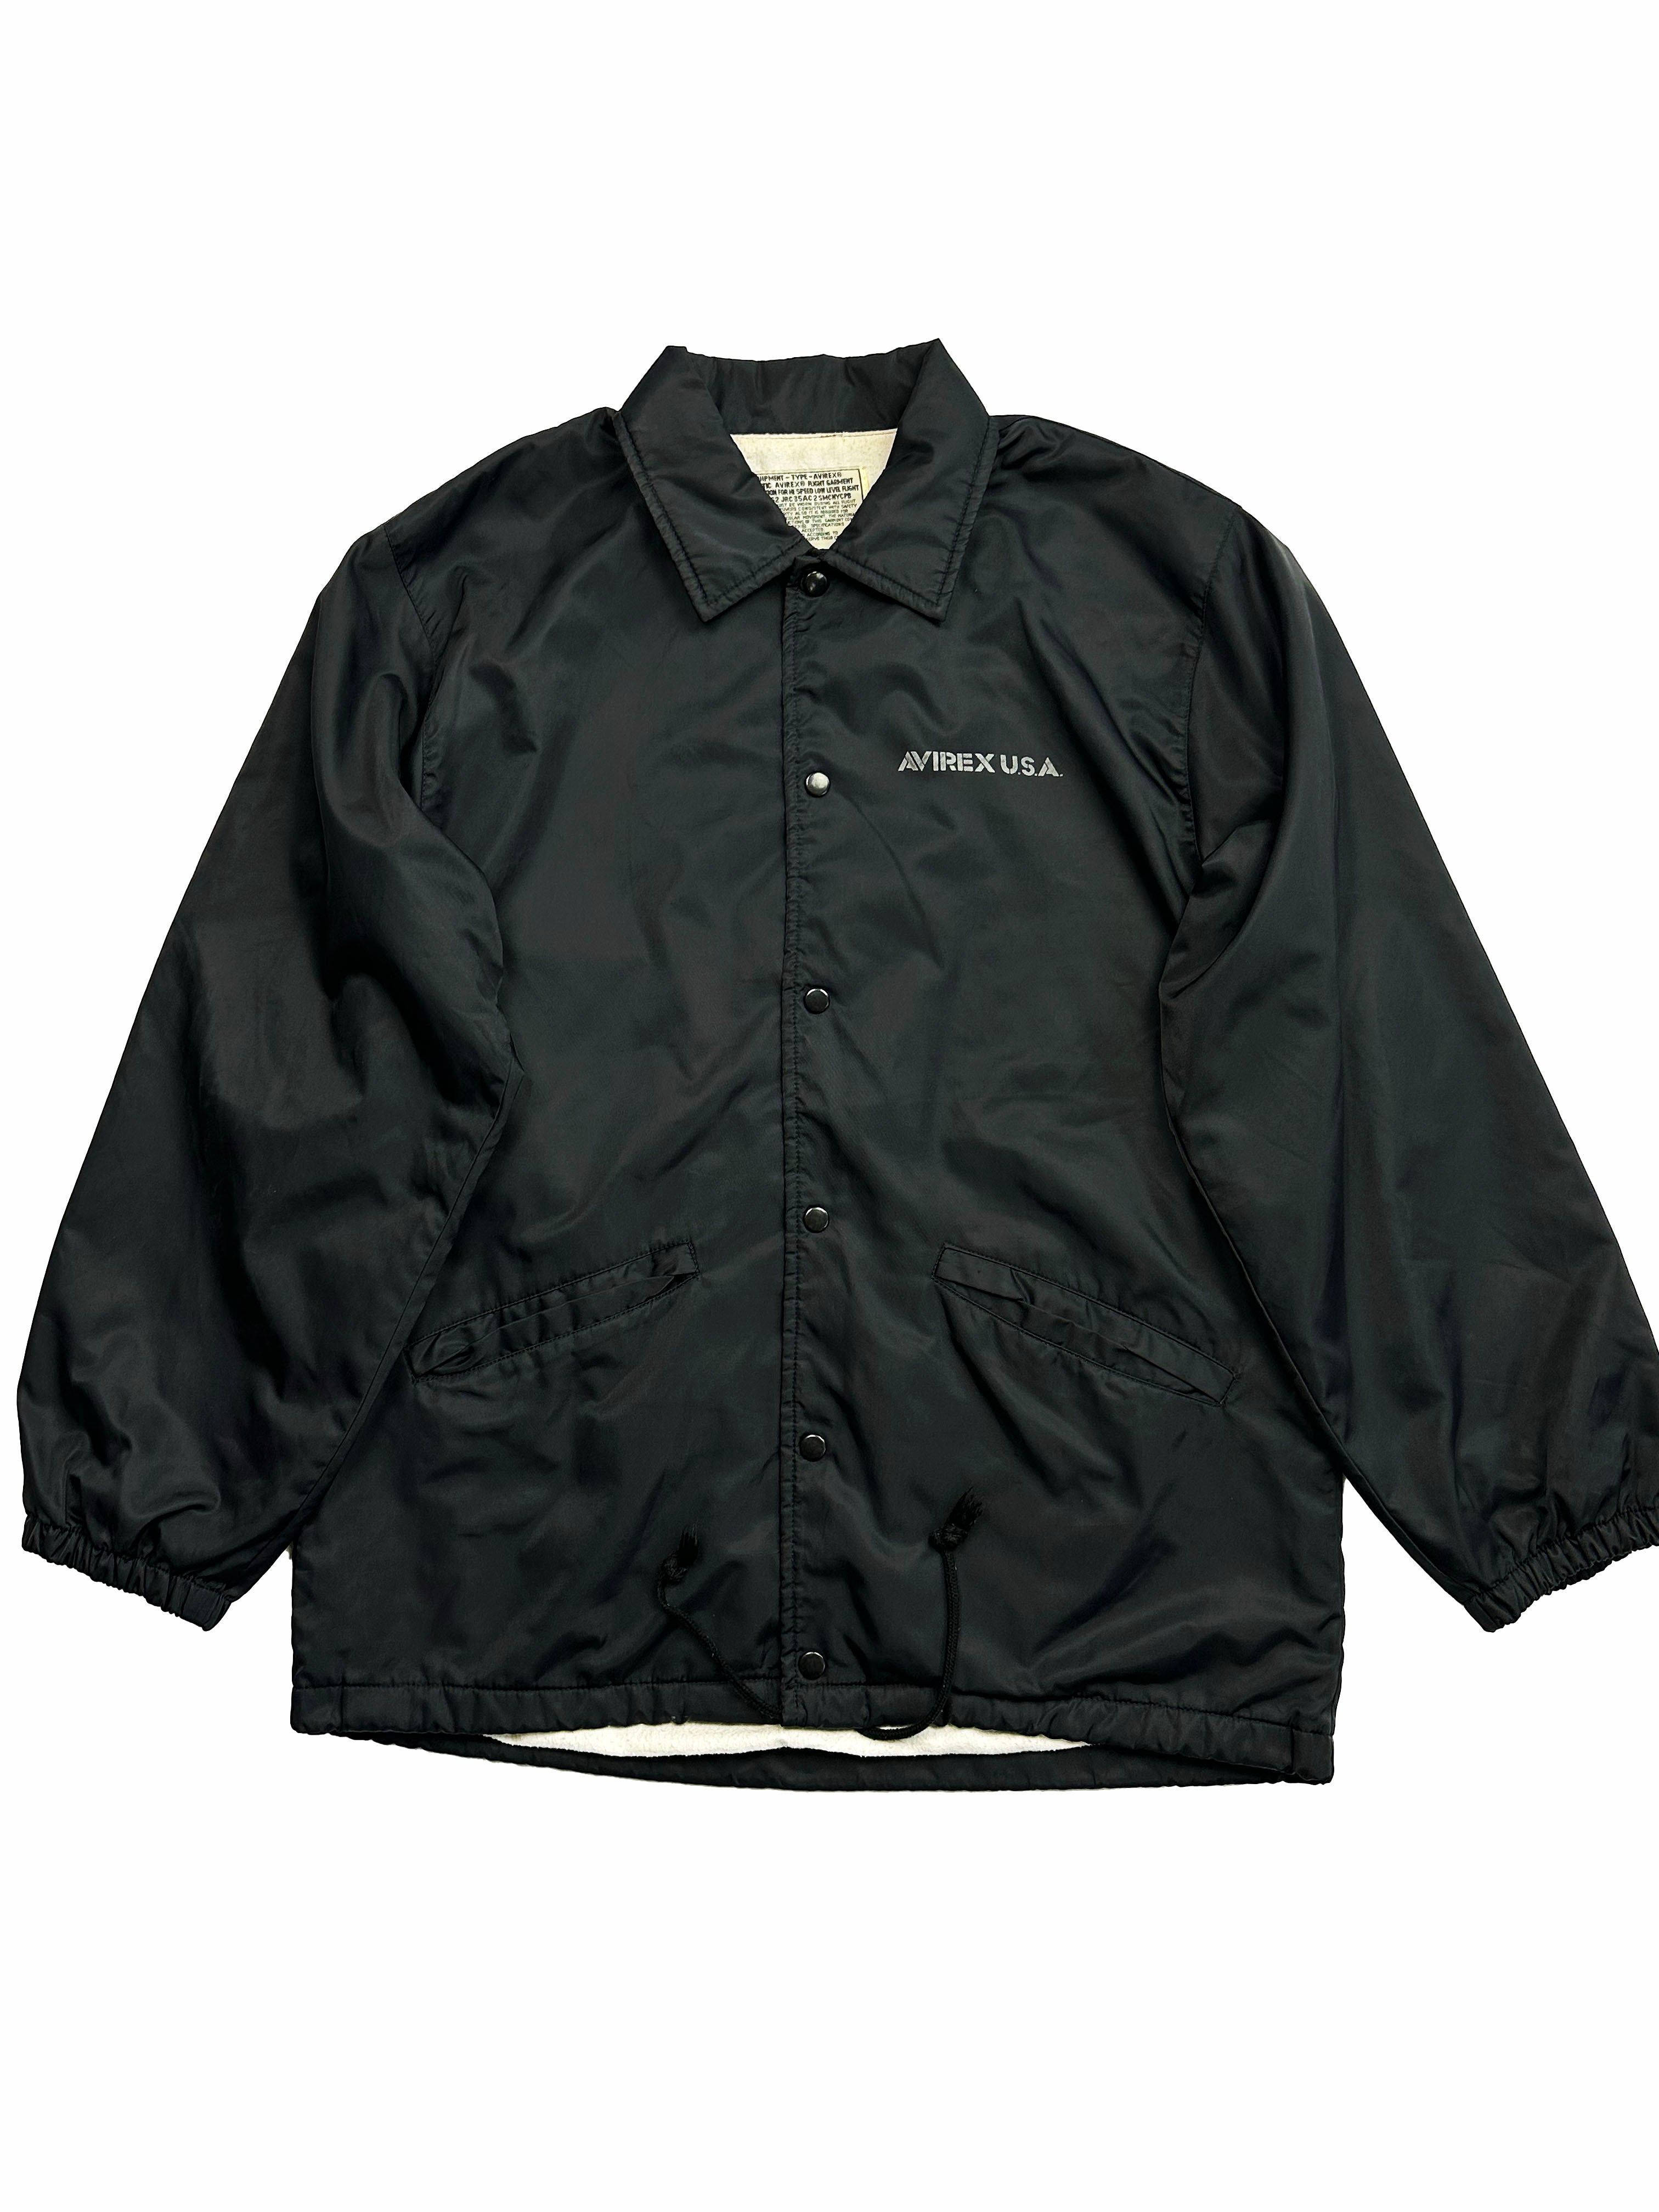 Avirex Black Coach Jacket 90's